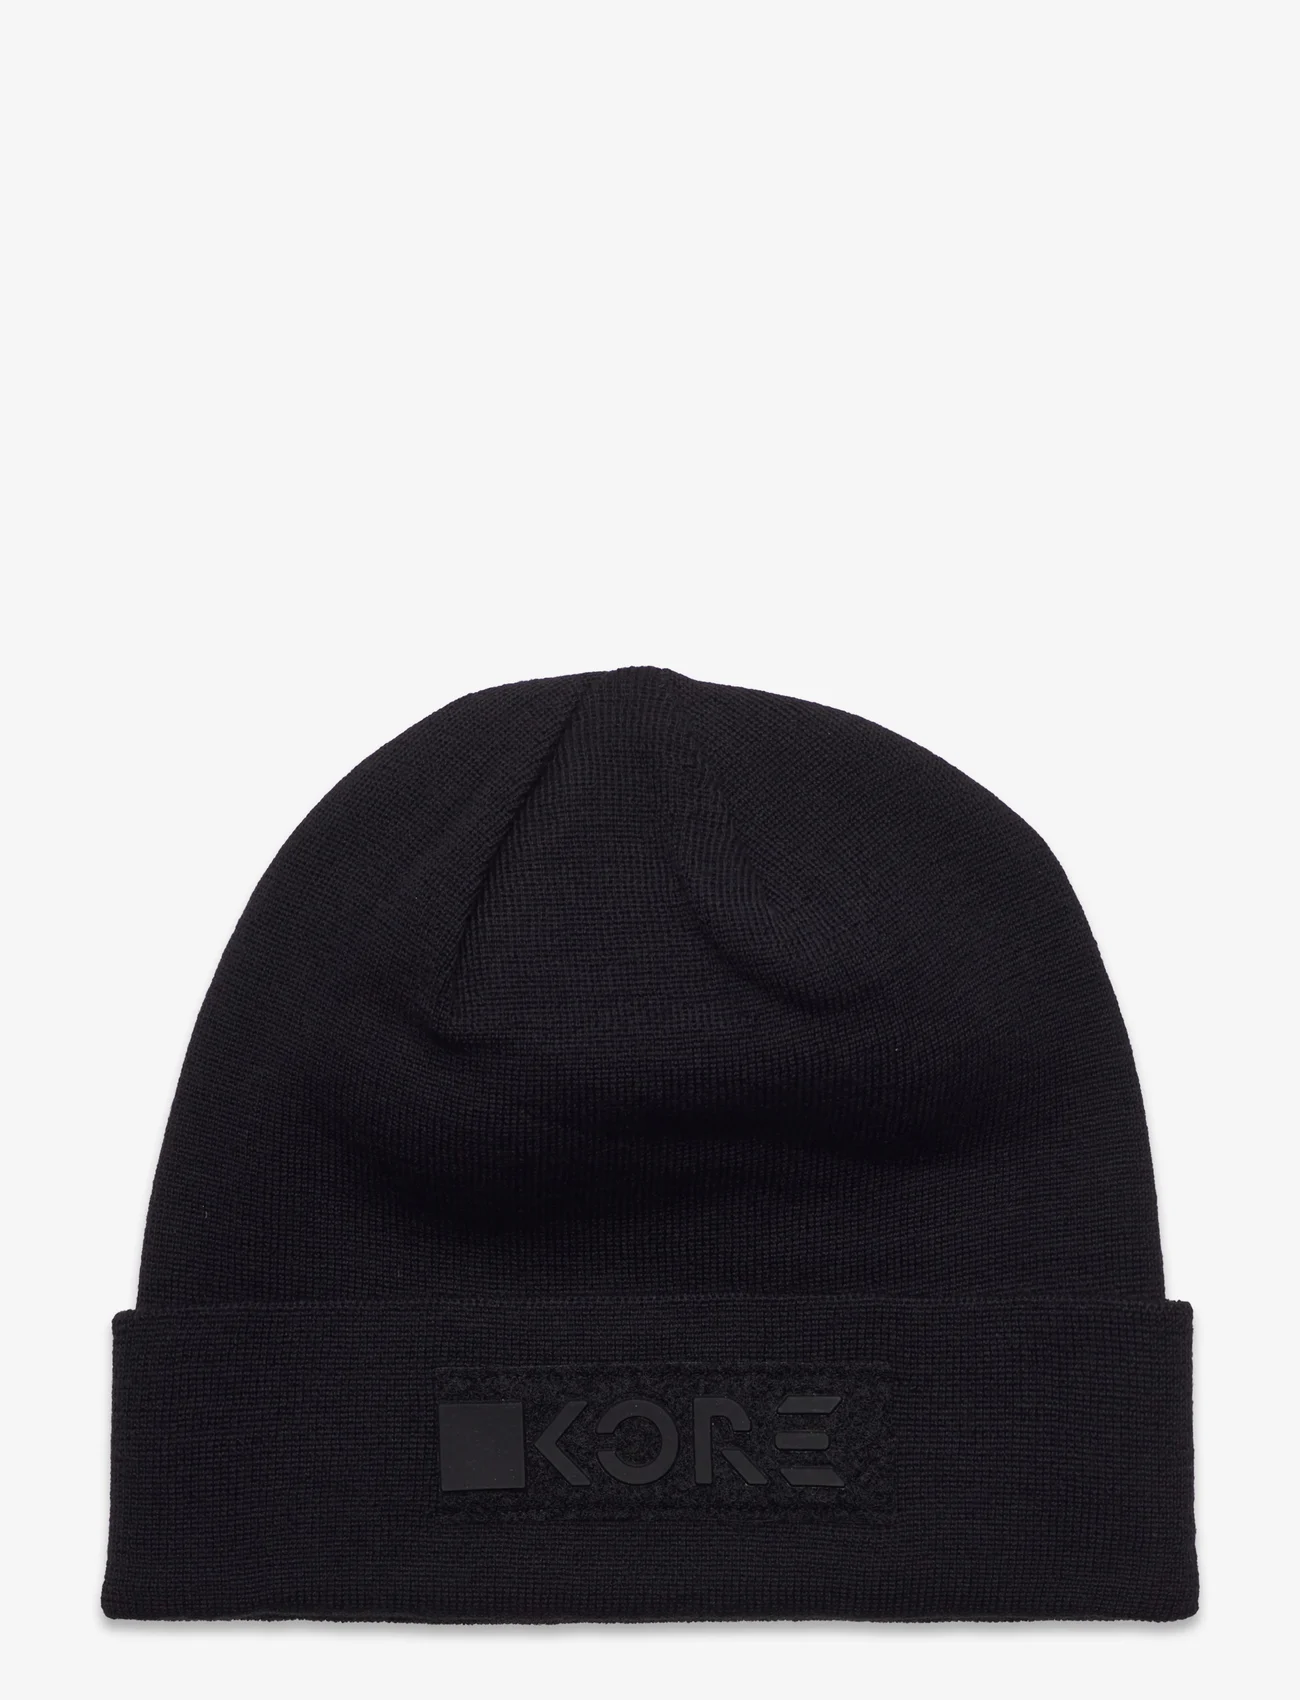 Head - KORE Beanie - hats - black - 0